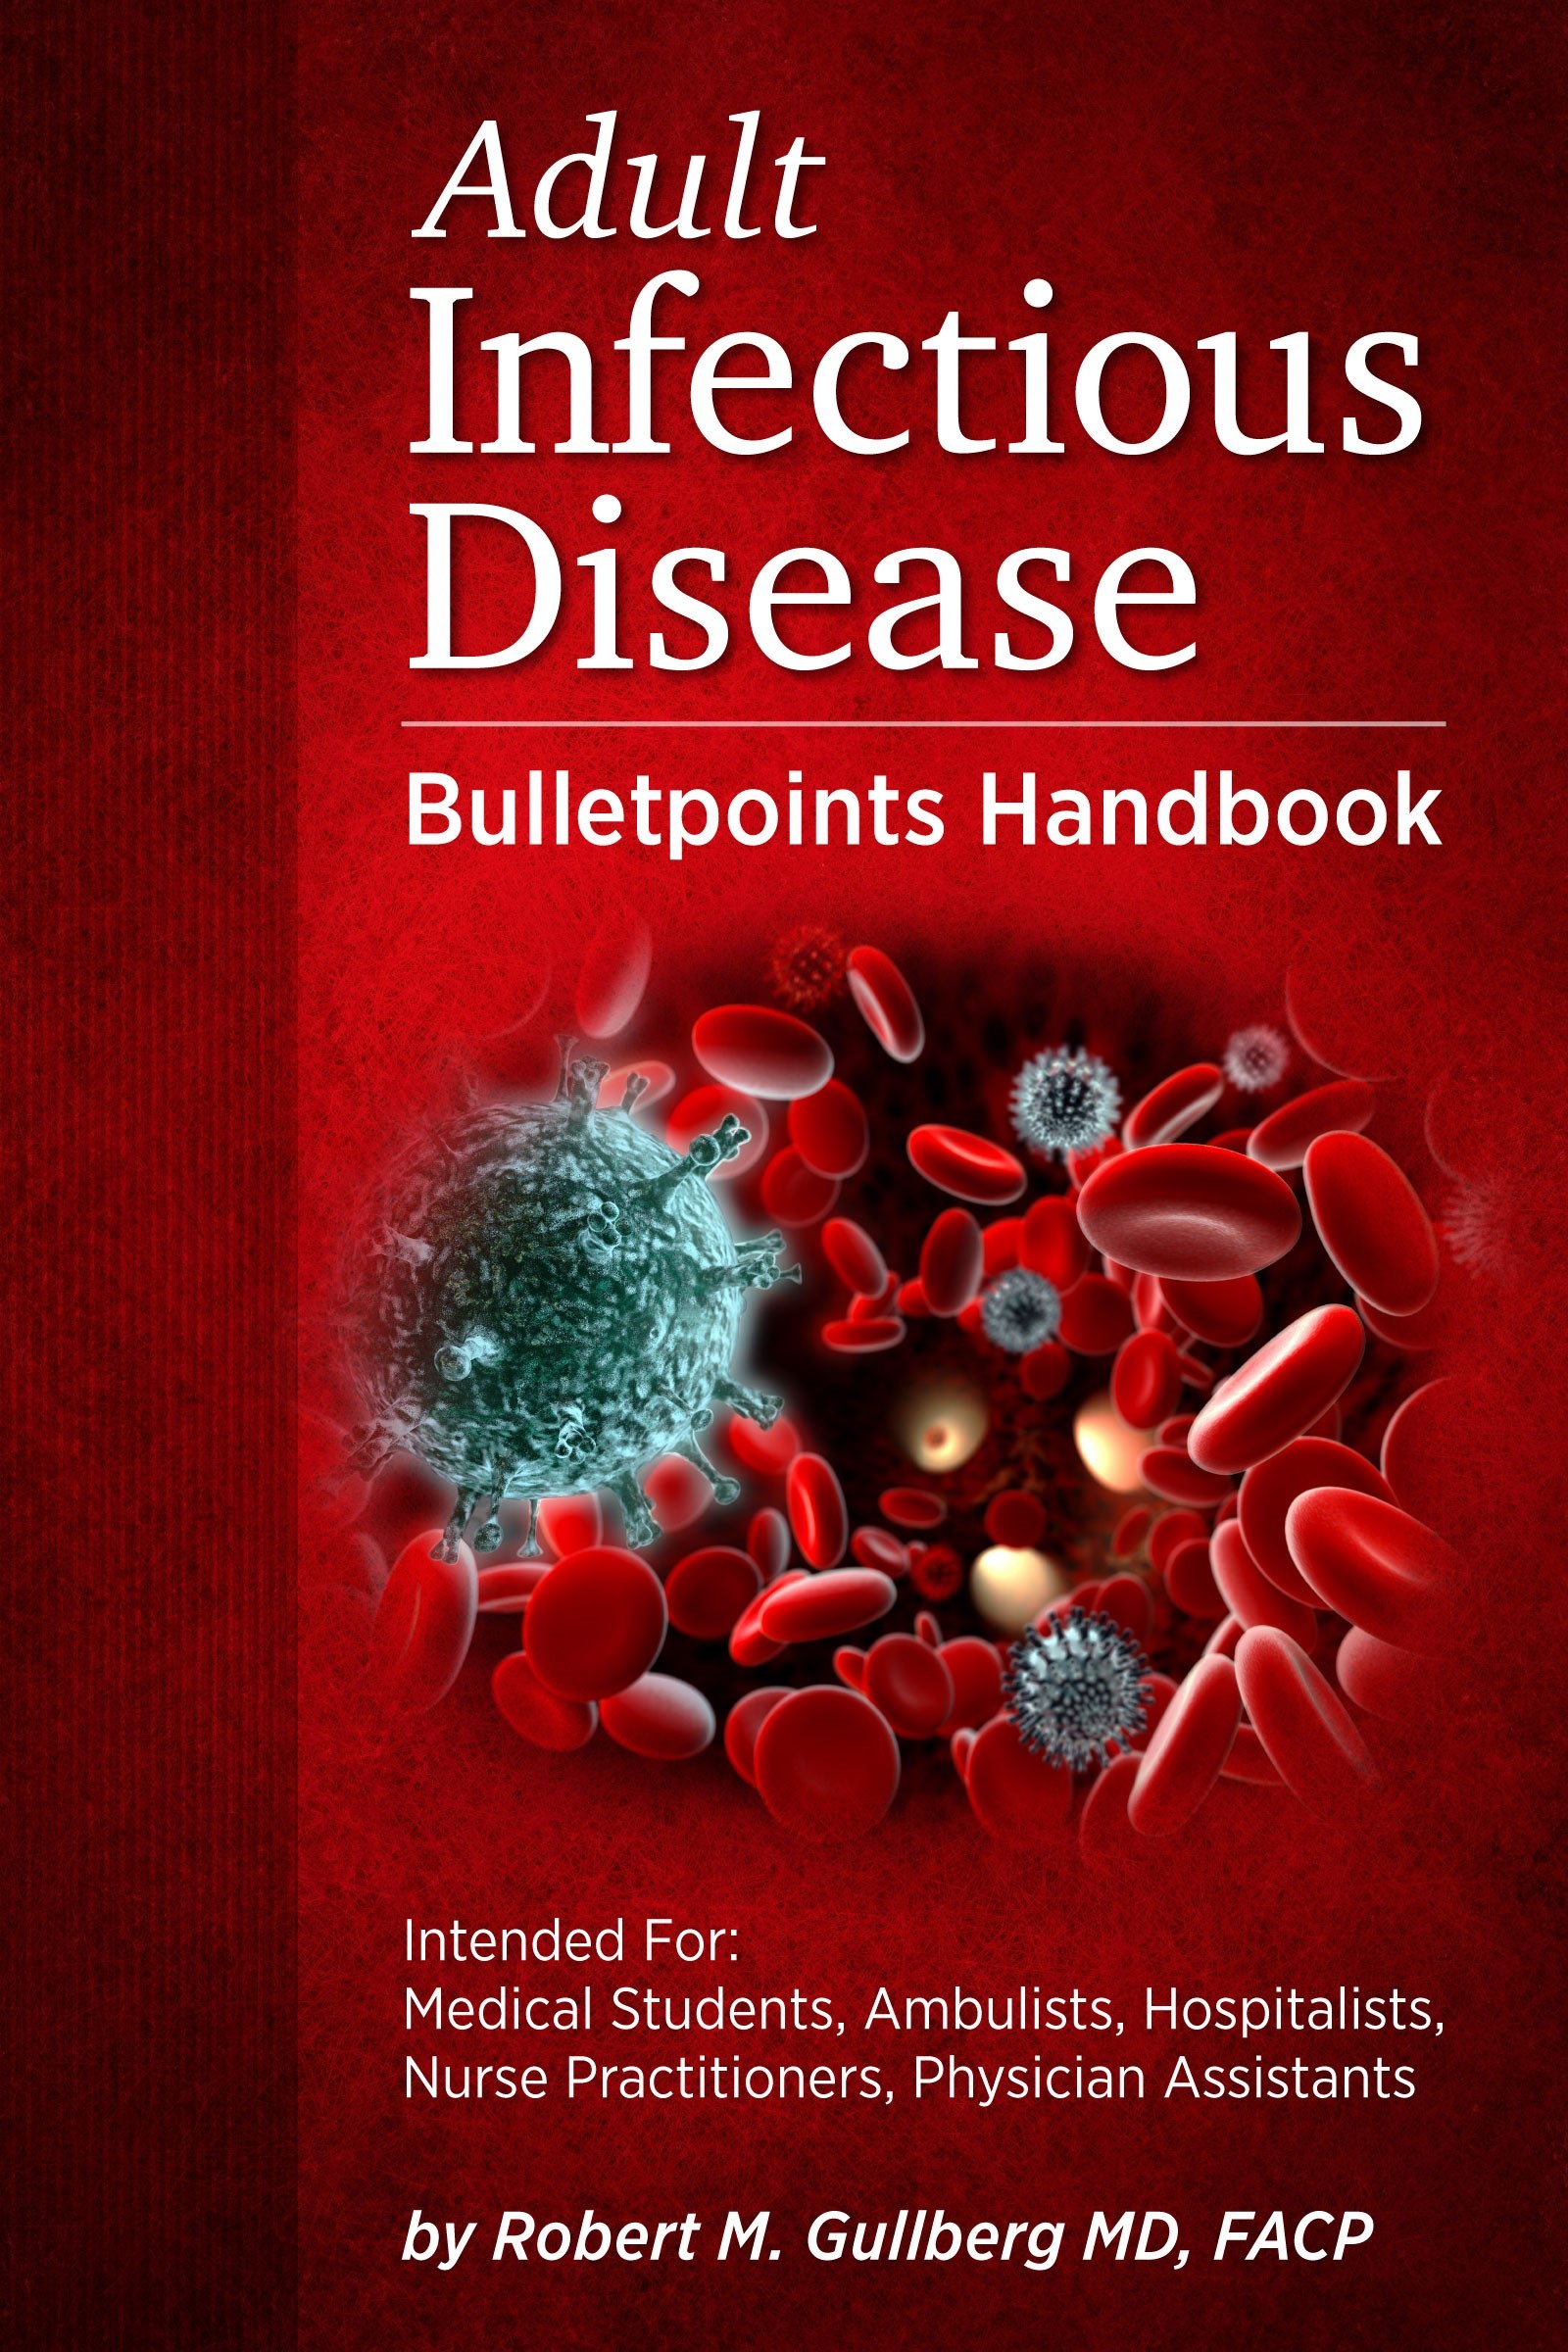 Adult Infectious Disease Bulletpoints Handbook